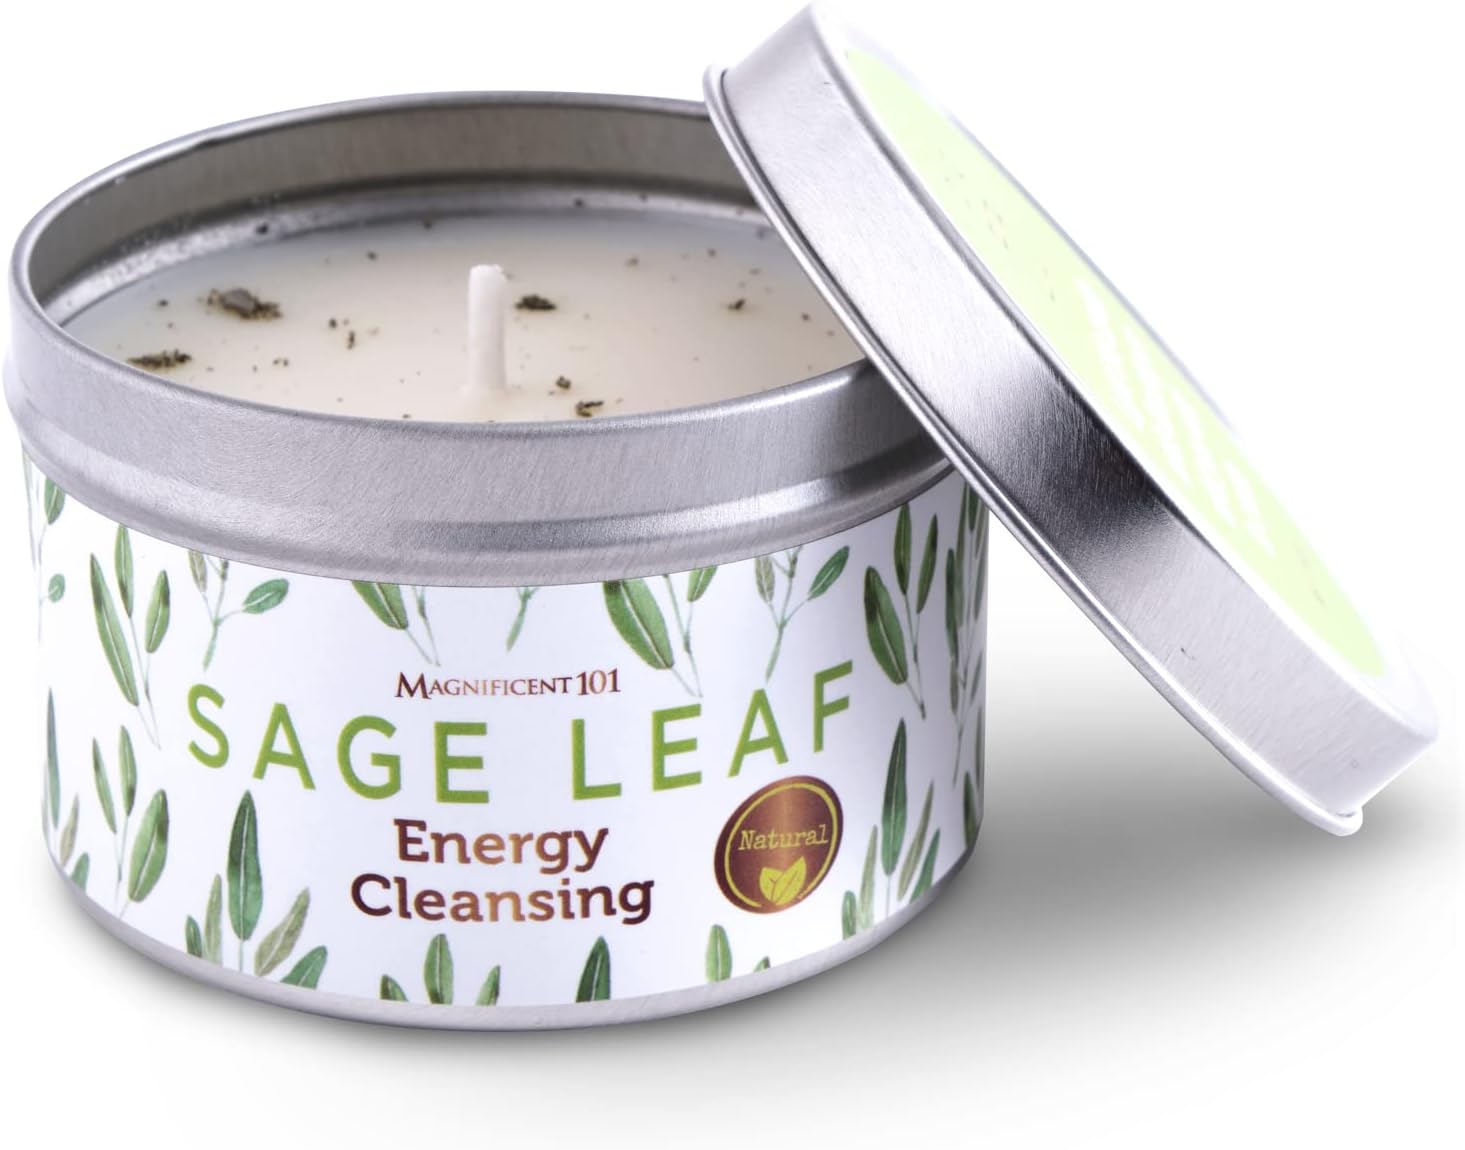 Limited Time Offer: Magnificent 101 Sage Leaf Energy Cleansing Candle - 6-oz Tin Holder